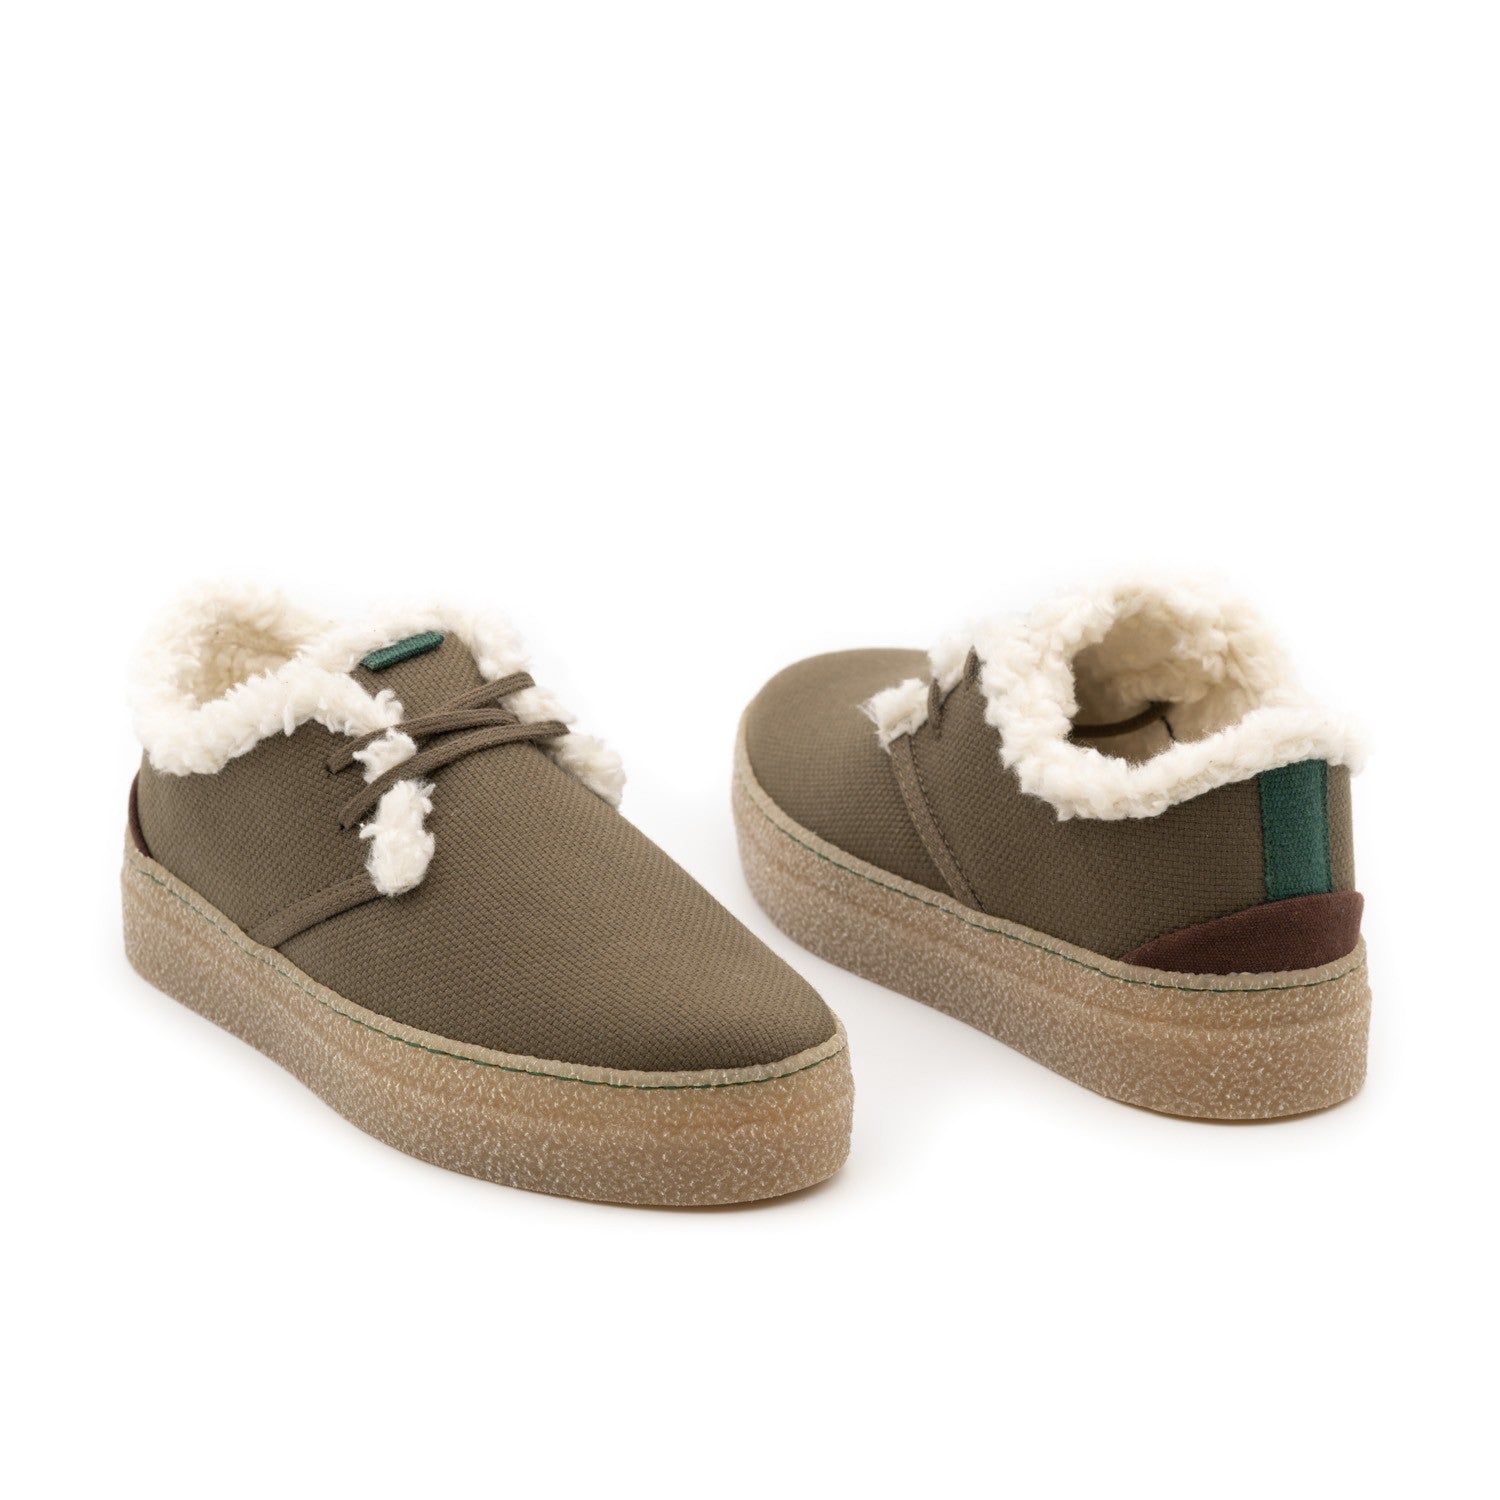 Vegan winter shoe of recycled cotton khaki - VESICA PISCIS FOOTWEAR